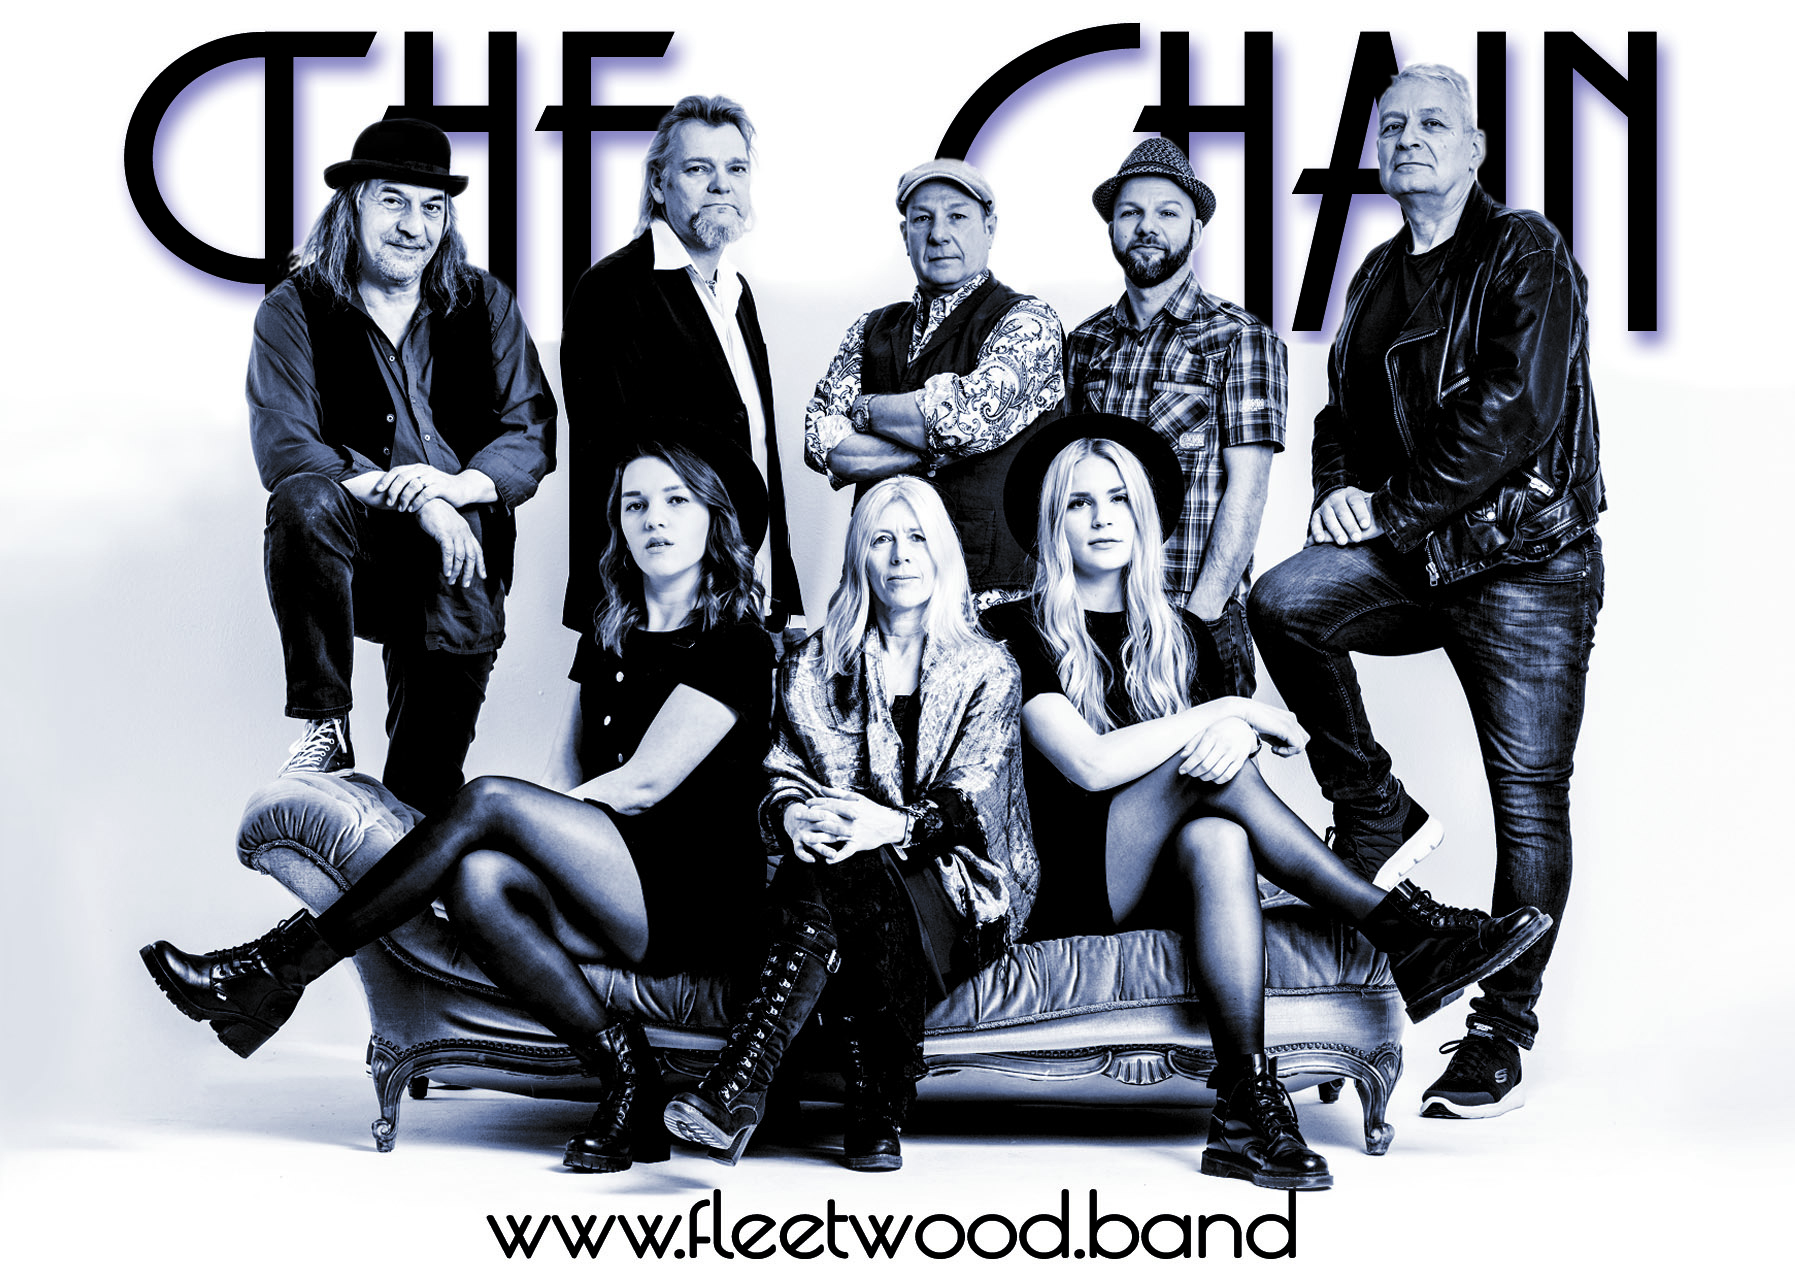 (c) The-chain-fleetwood-cover.de